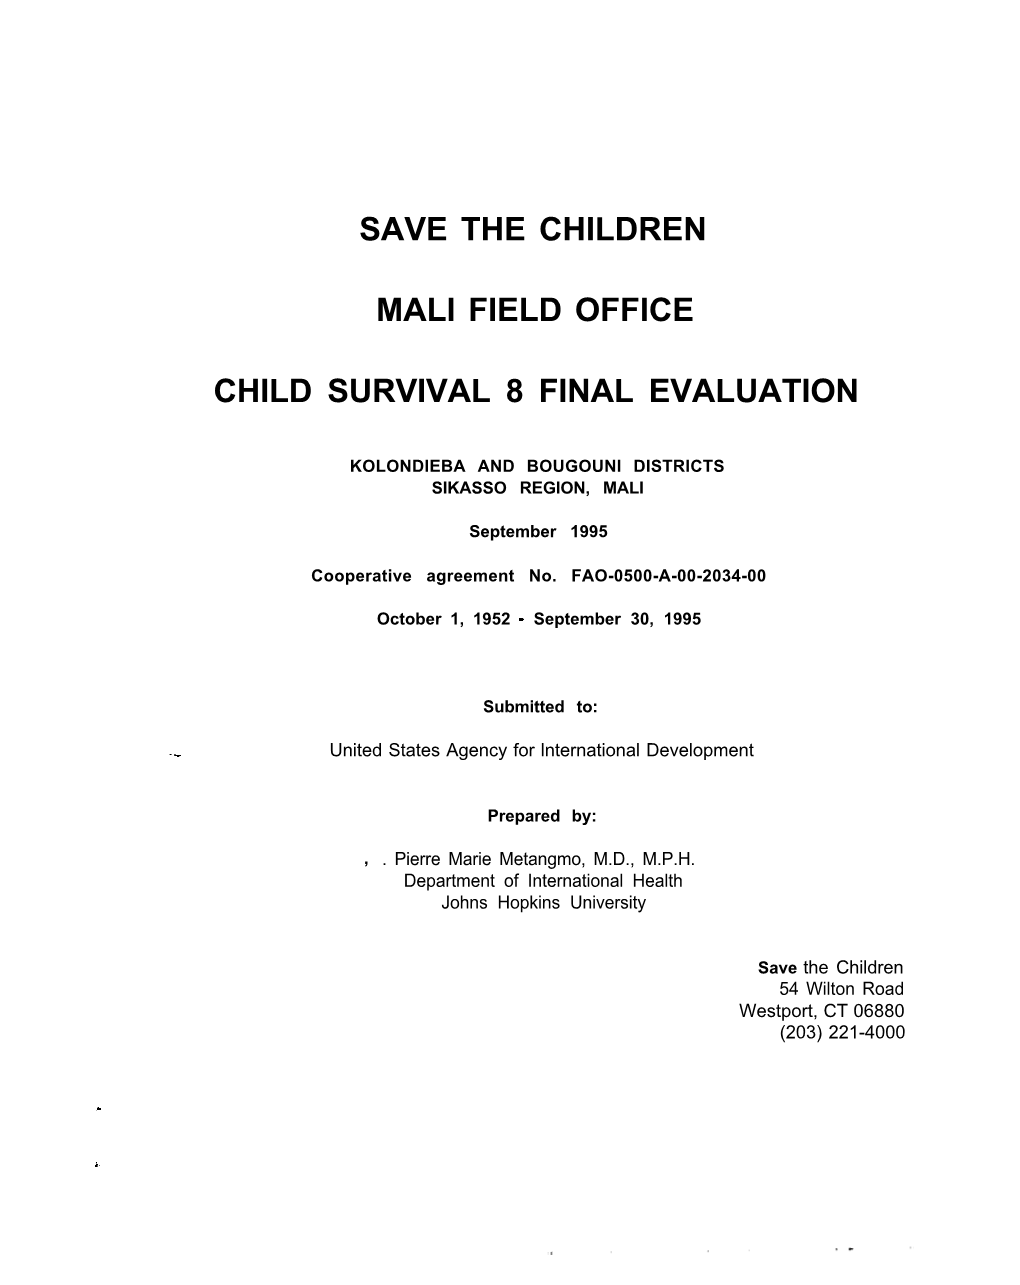 Save the Children Mali Field Office Child Survival 8 Final